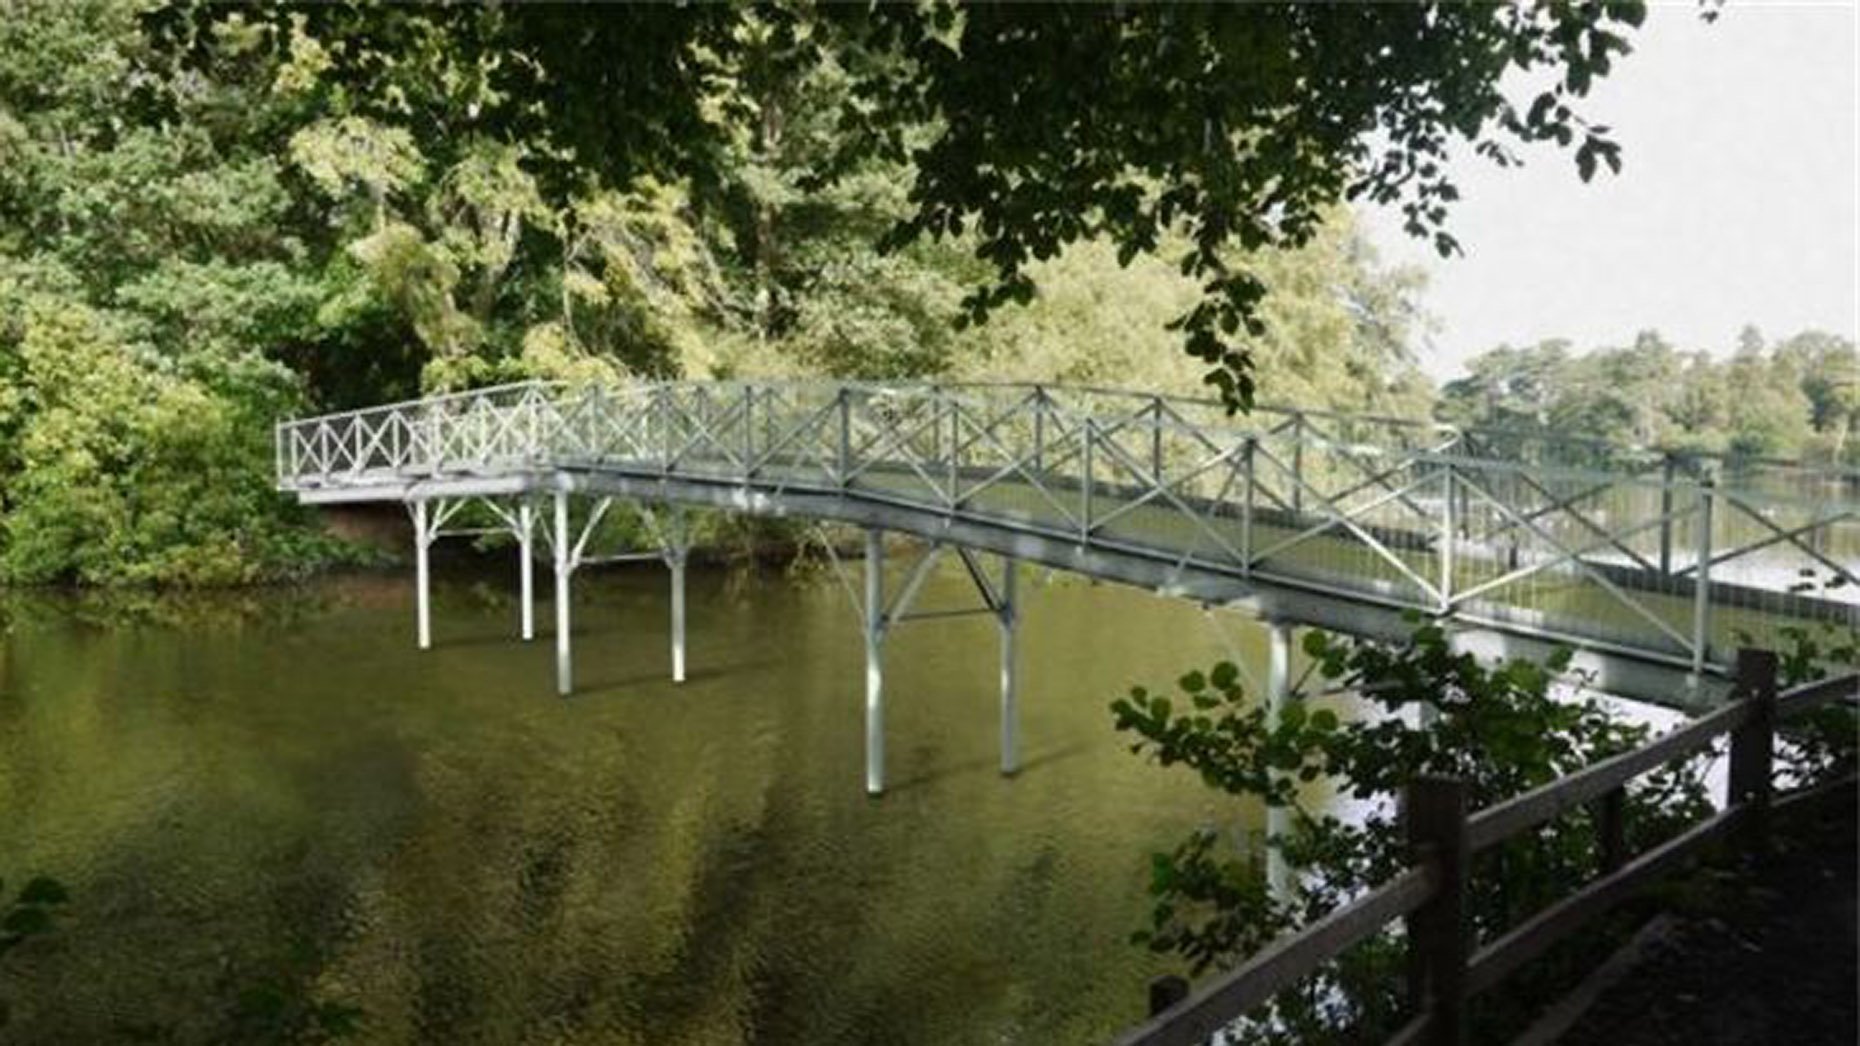 Designs of the new White Bridge at Hartsholme Park